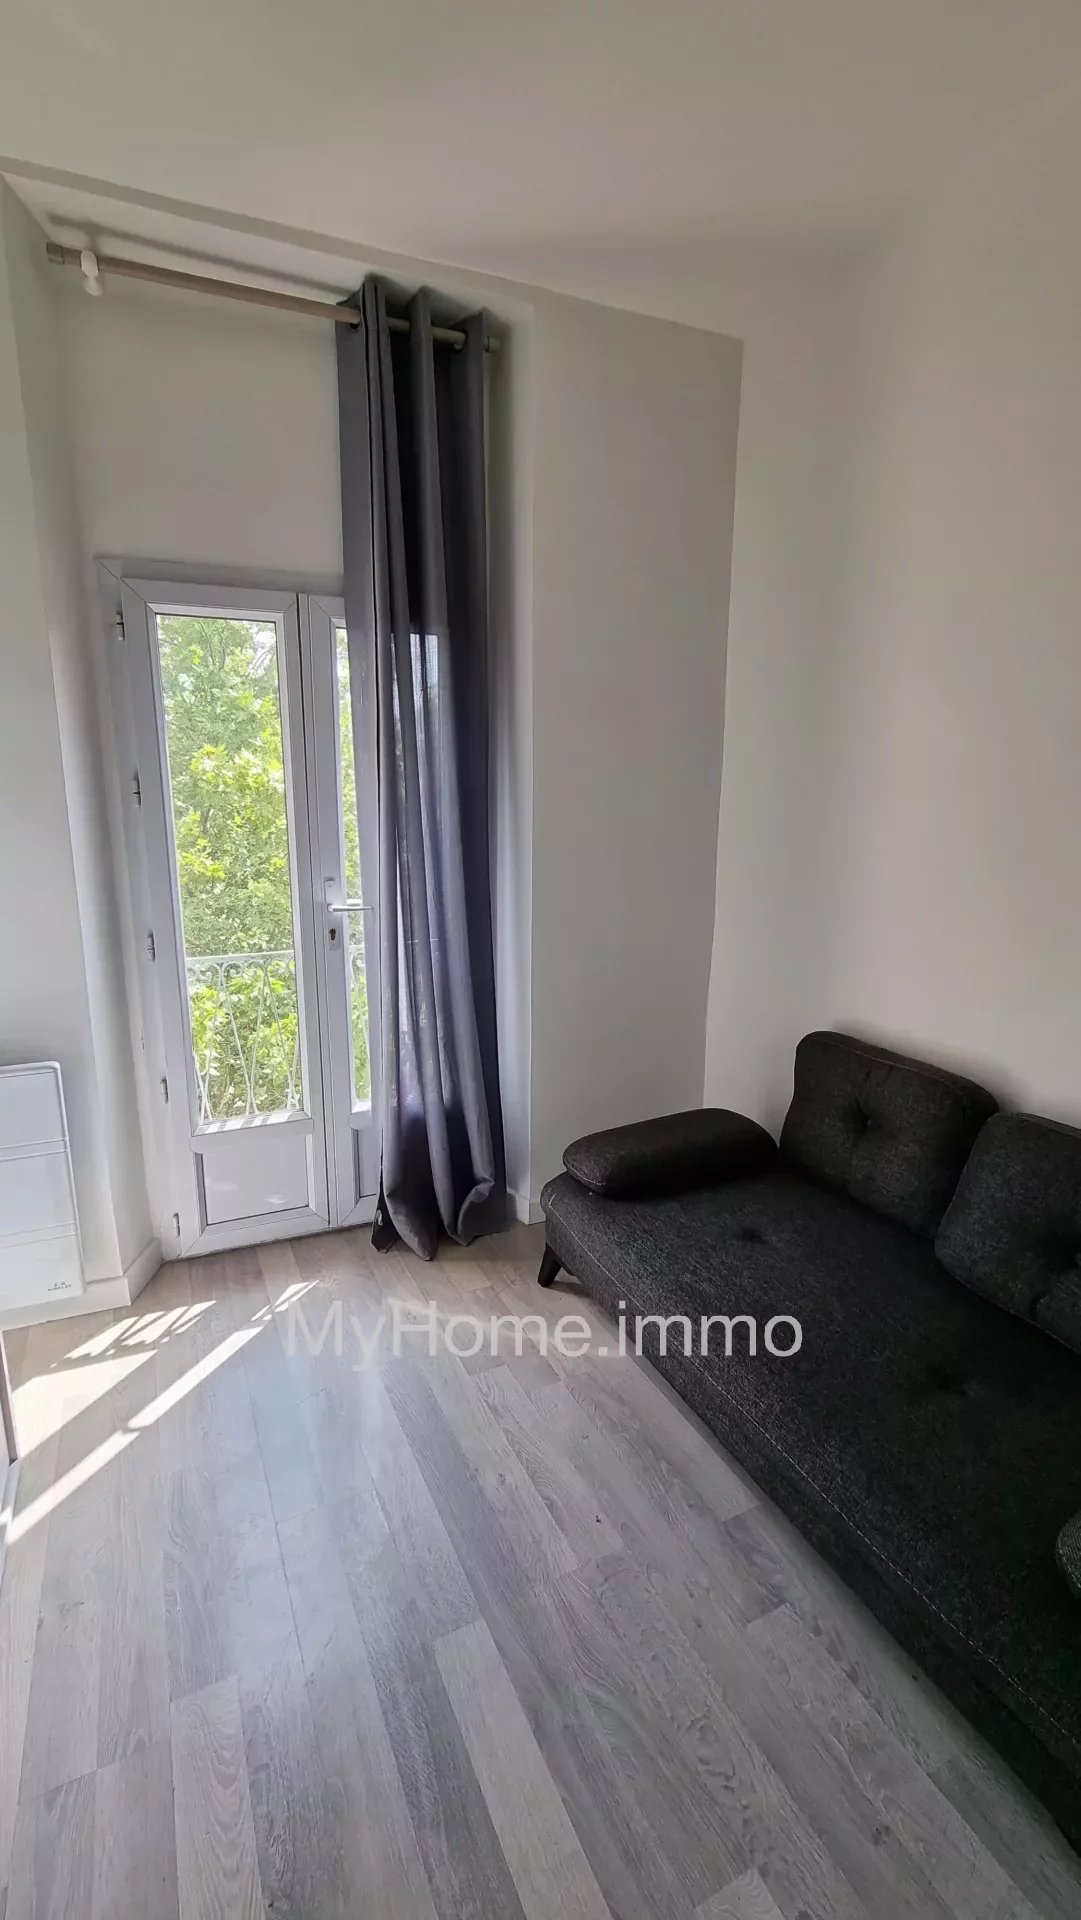 Vente Appartement 20m² 1 Pièce à Nice (06200) - Myhome.Immo